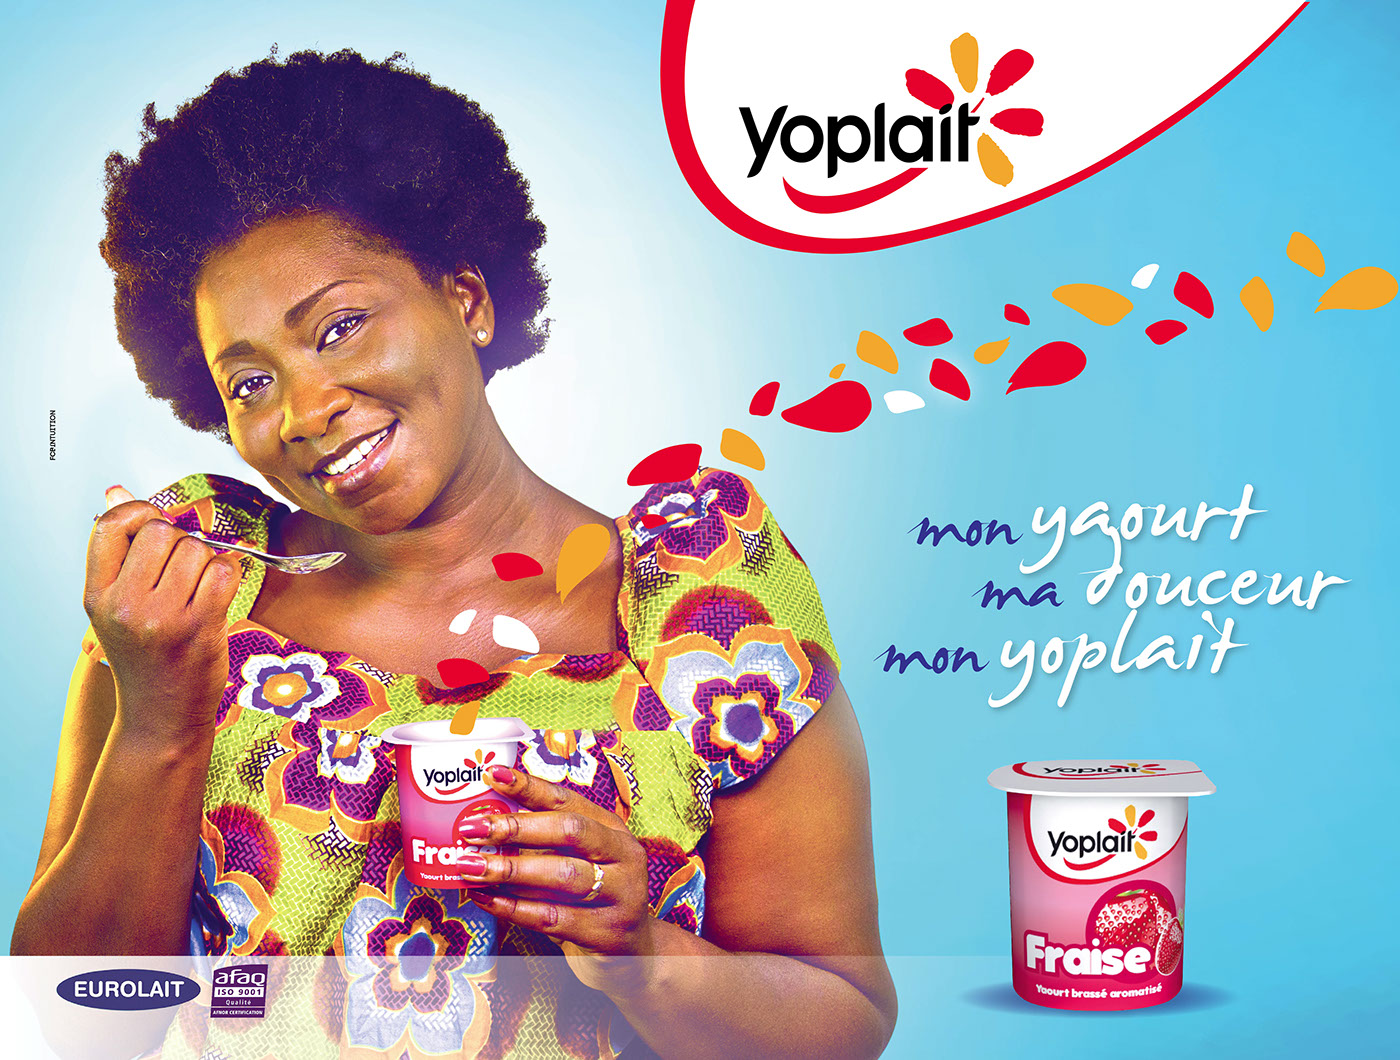 yaourt YOP yoplait eurolait Couleur abidjan Cote d'Ivoire yogurt